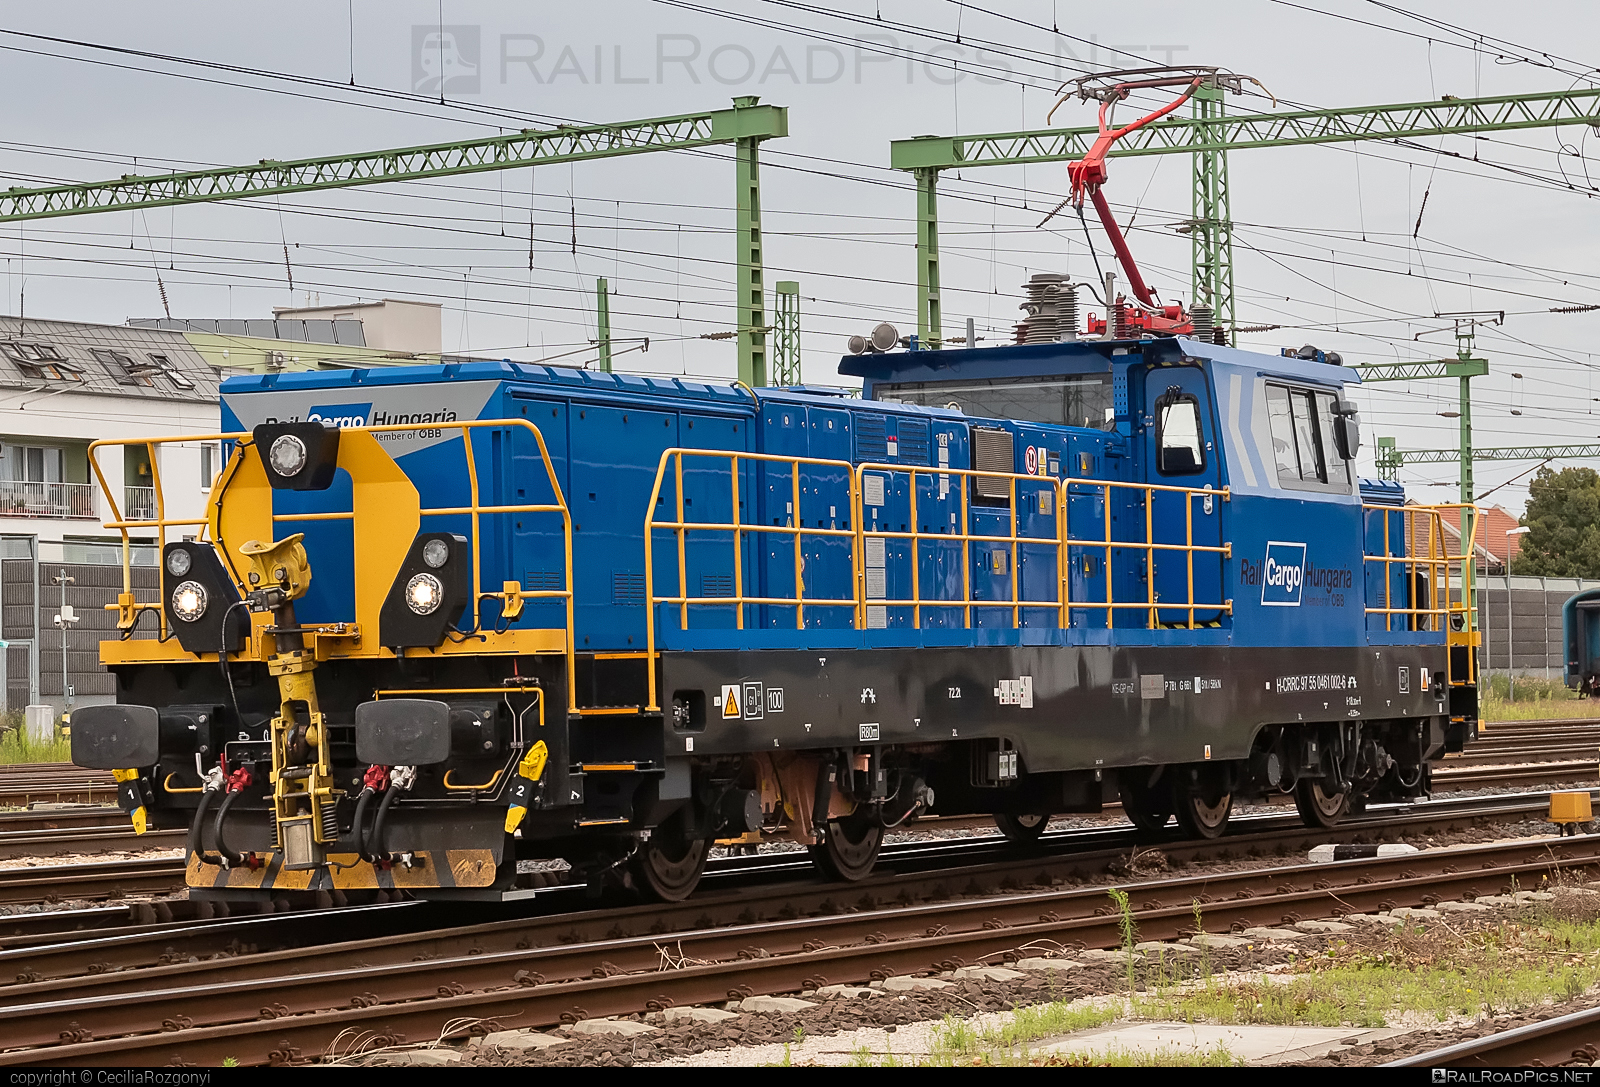 CRRC ZELC CHA1B1 Grasshopper - 461 002 operated by Rail Cargo Hungaria ZRt. #crrc #crrcZelc #crrcZelcCha1b1 #crrcZelcGrasshopper #crrcZelcVerkehrstechnikGmbh #crrcZhuzhou #grasshopper #rch #rchClass461